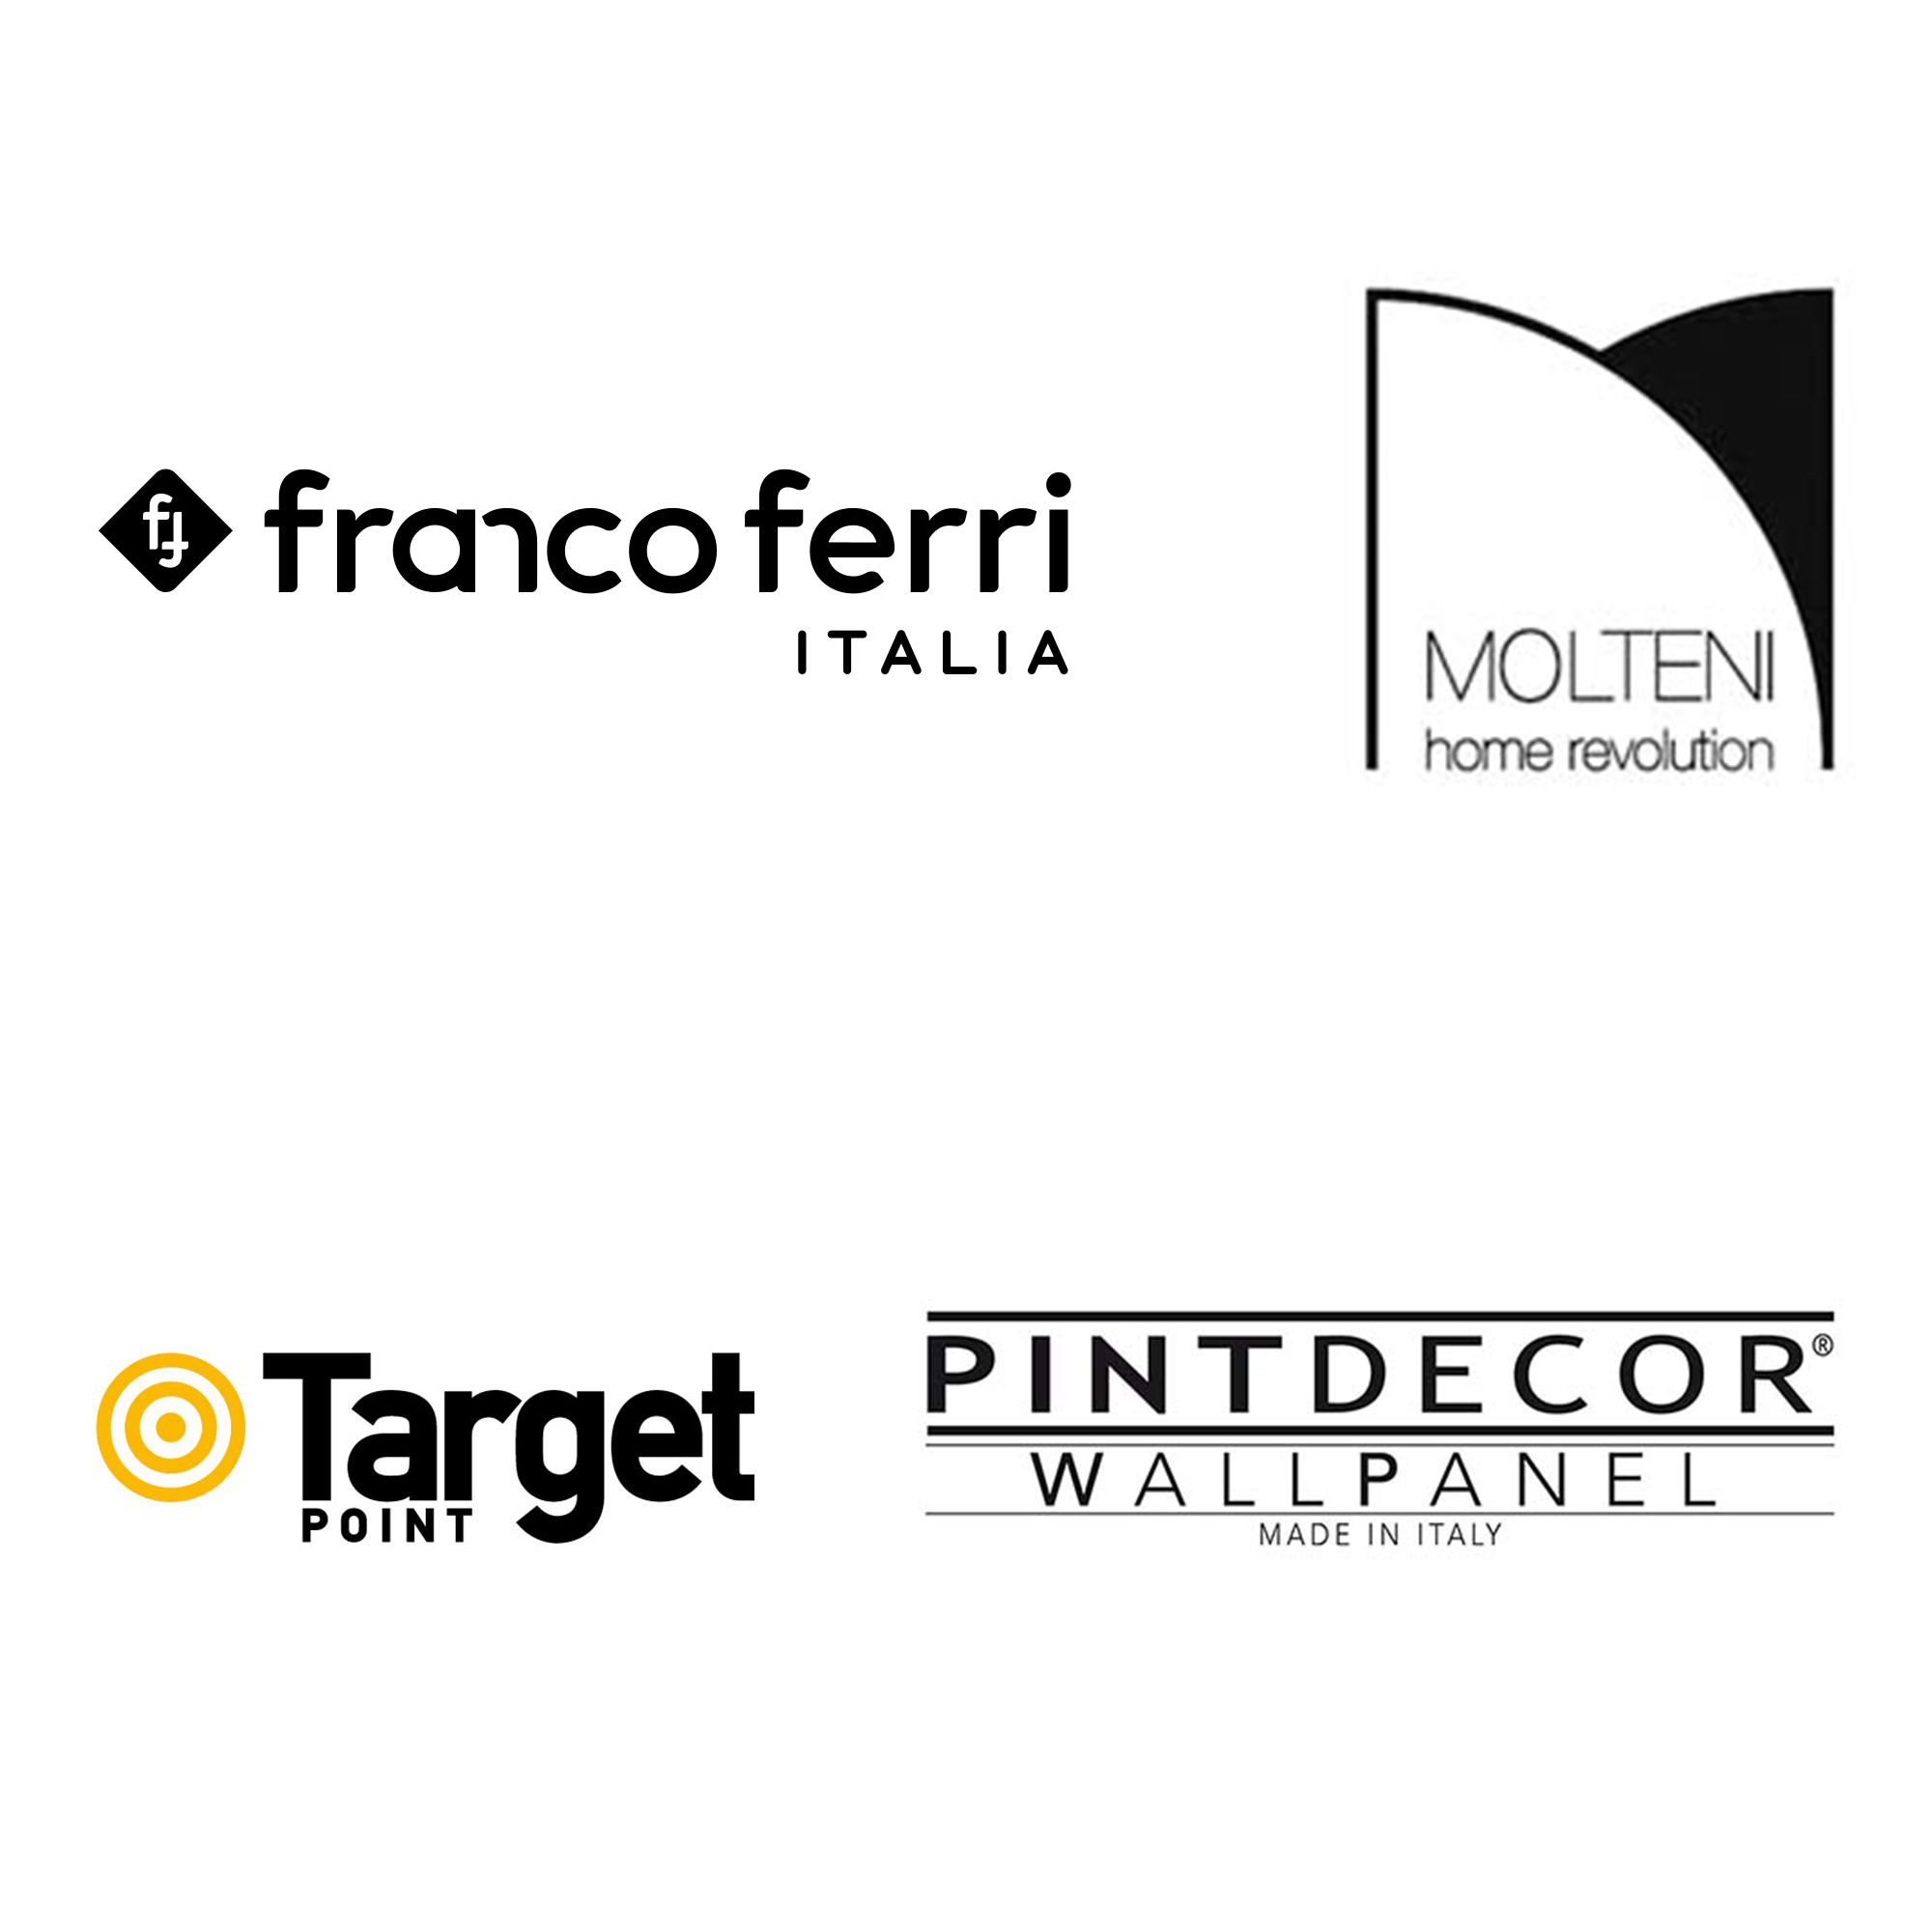 Molteni Home Revolution, Franco Ferri, Target Point, PinteDecor Marinelli Design Group arredamento a Roma